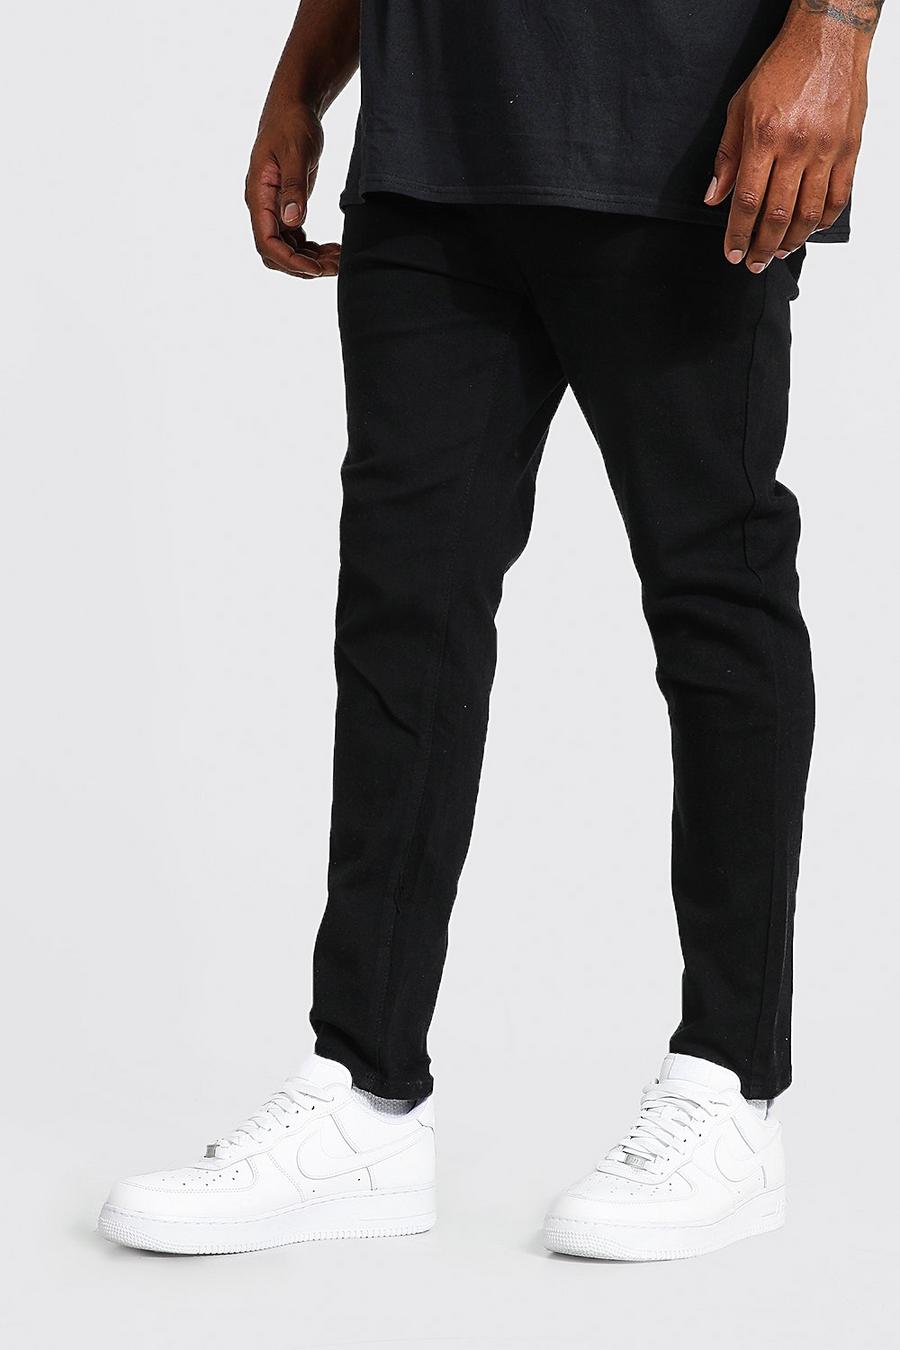 Black Plus Size Skinny Fit Jeans